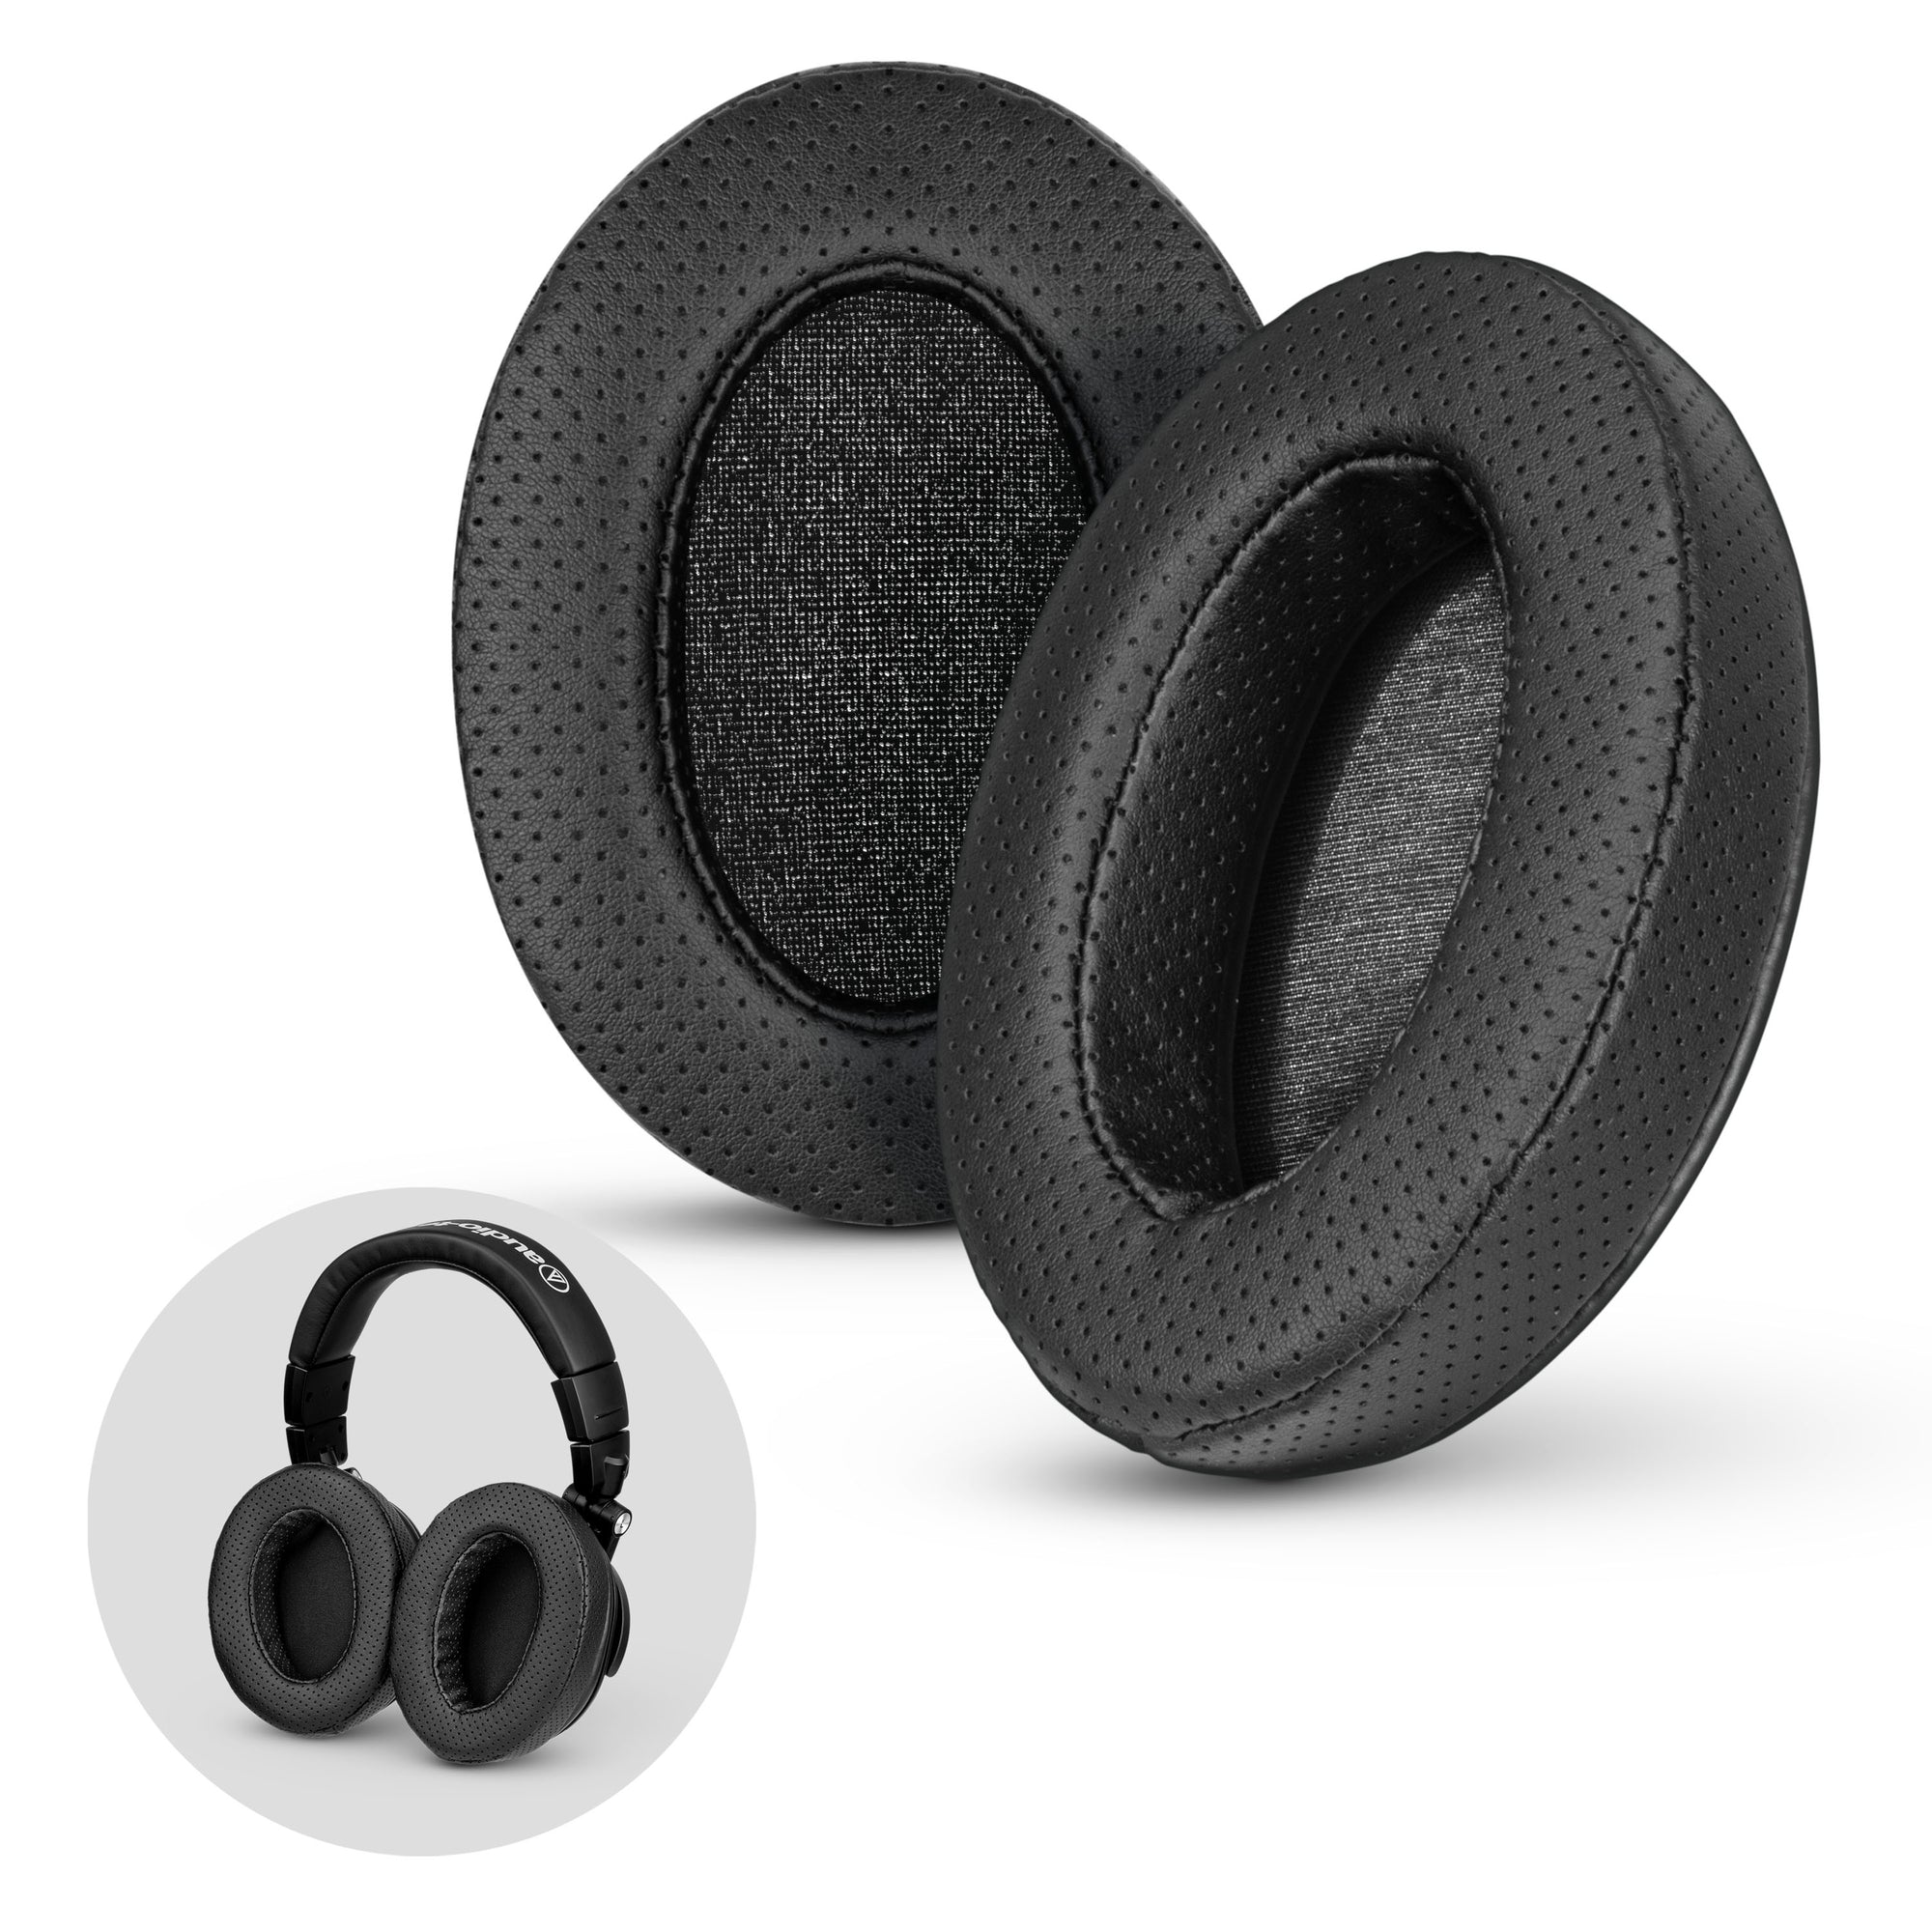 Headphone Memory Foam Earpads - Oval - Perforated